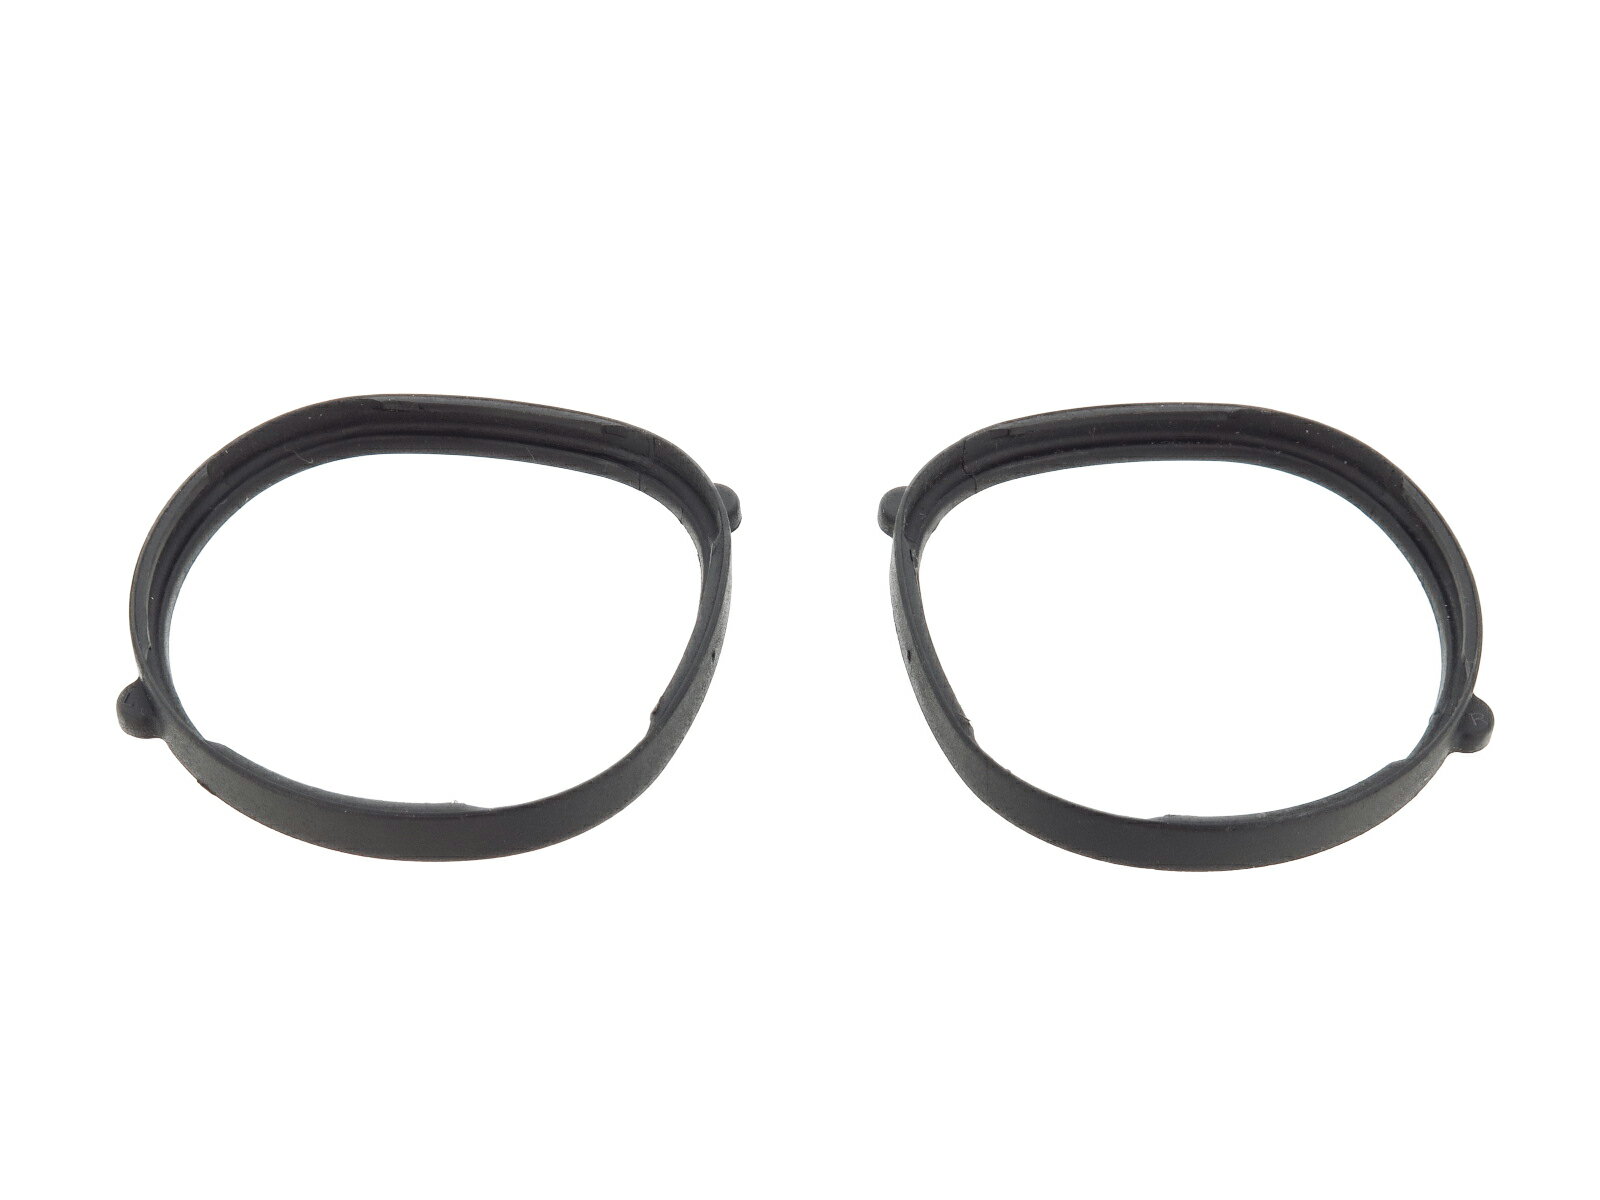 Oculusシリーズ対応 度付きアタッチメント(OQC-001) レンズ側フレーム 左右一組